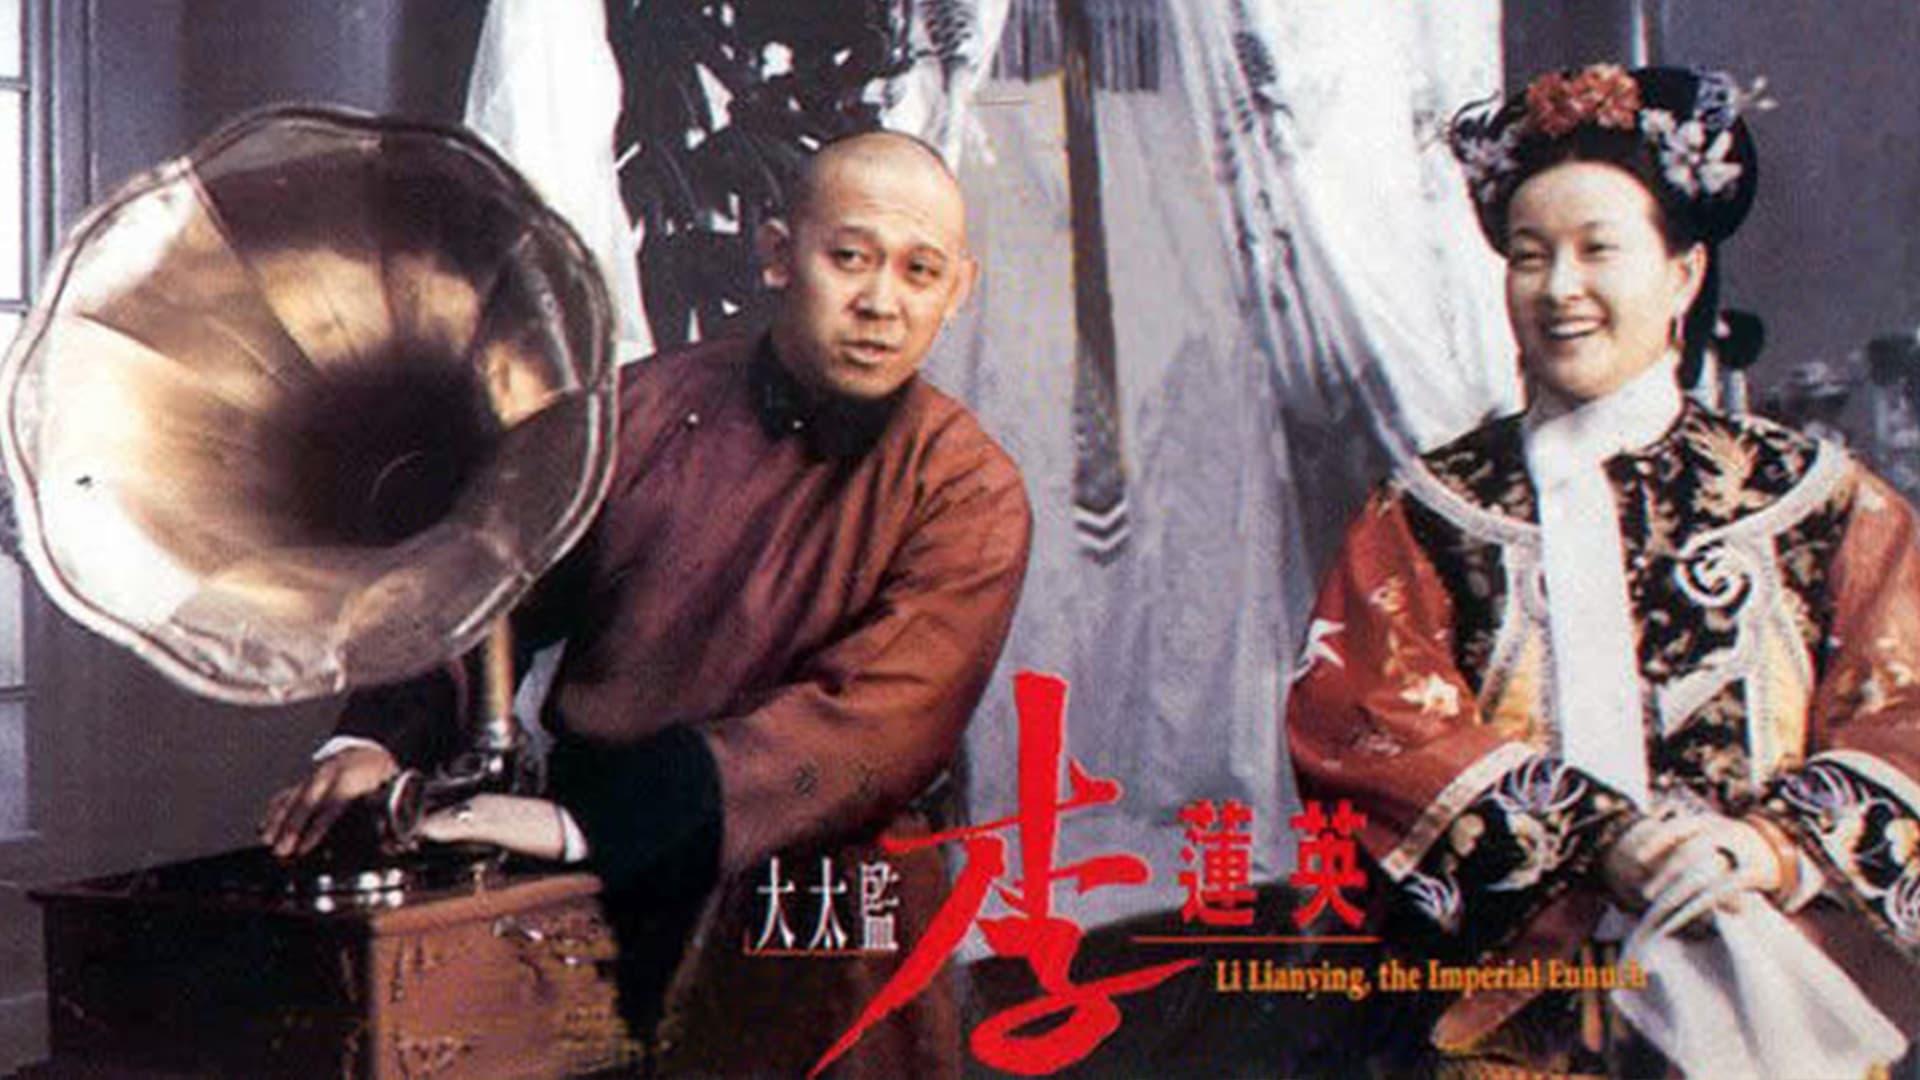 Li Lianying, the Imperial Eunuch backdrop